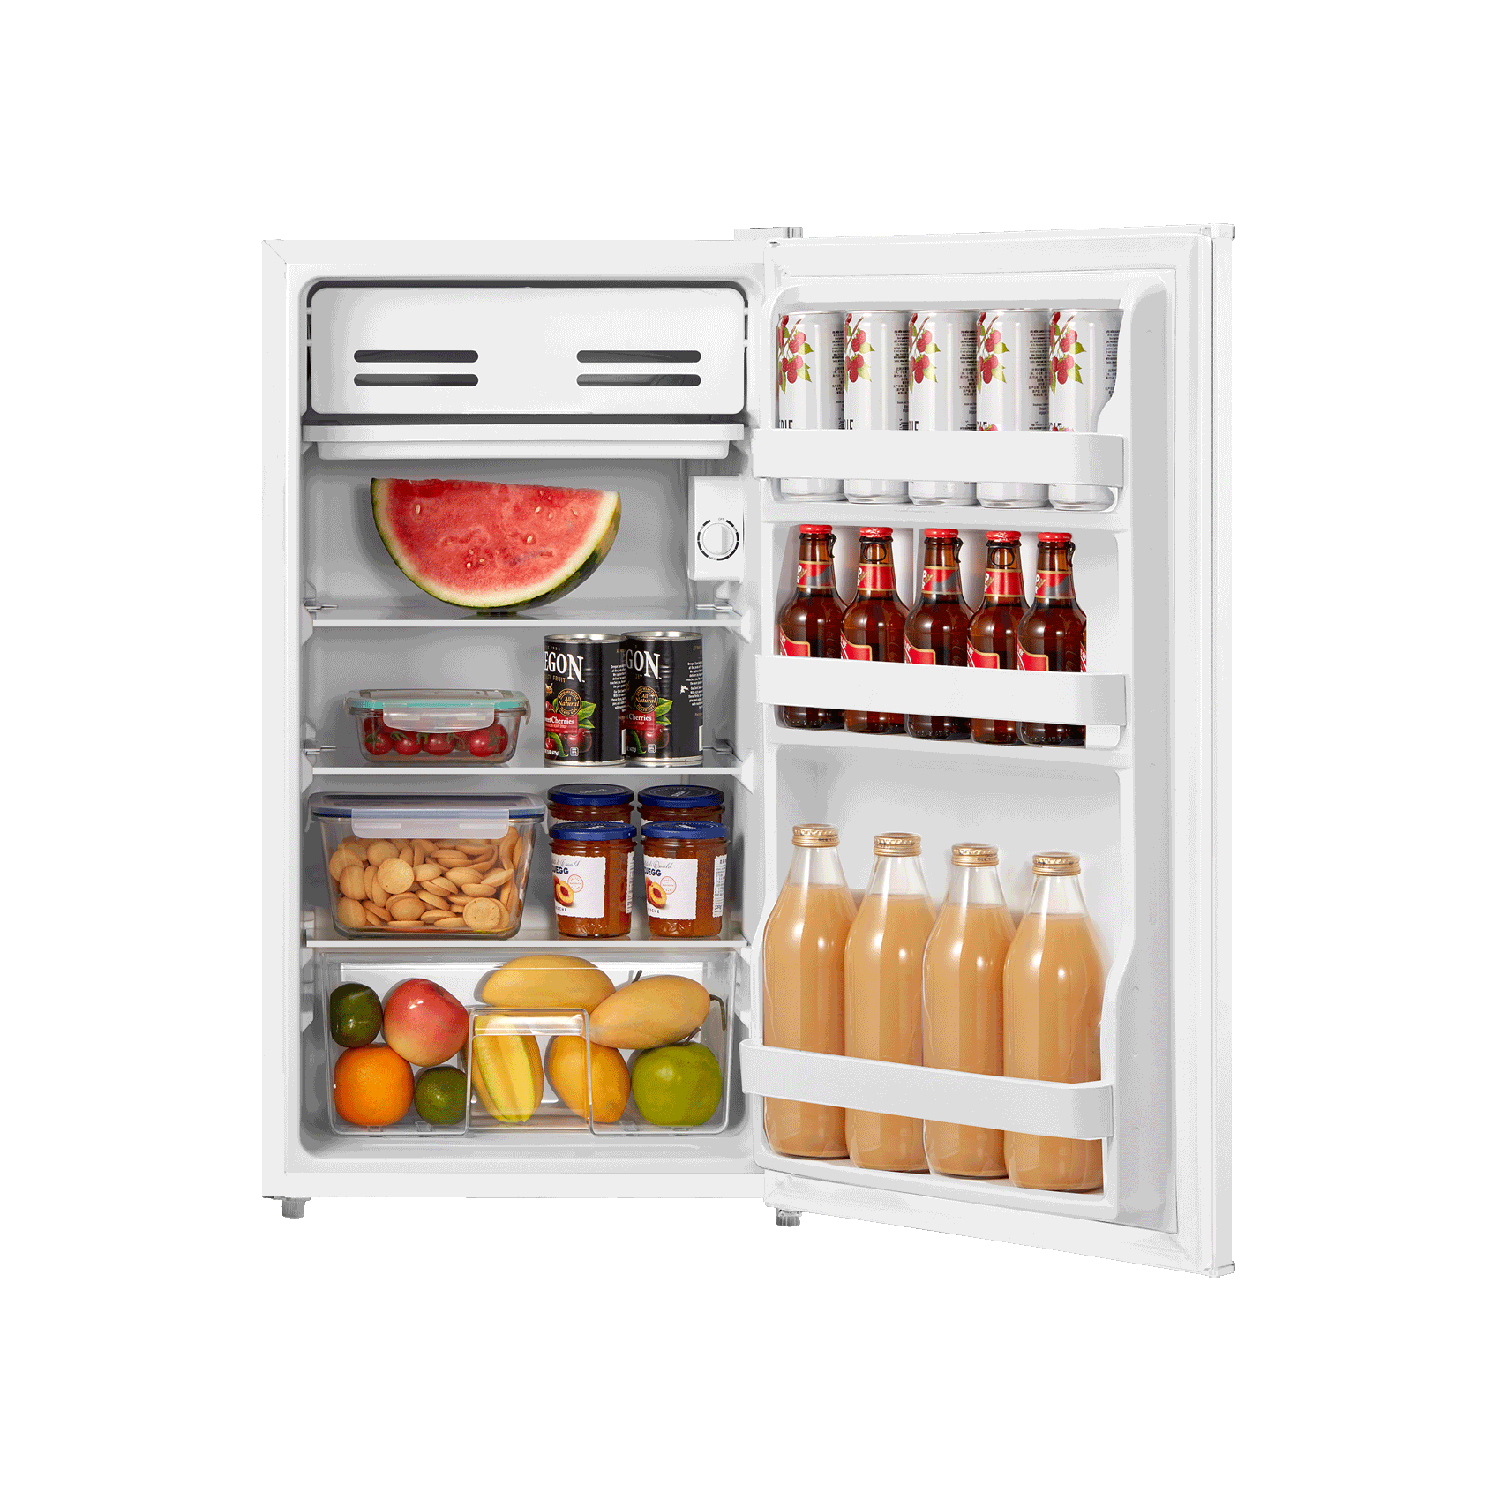 Comfee' Compact Refrigerator – Global